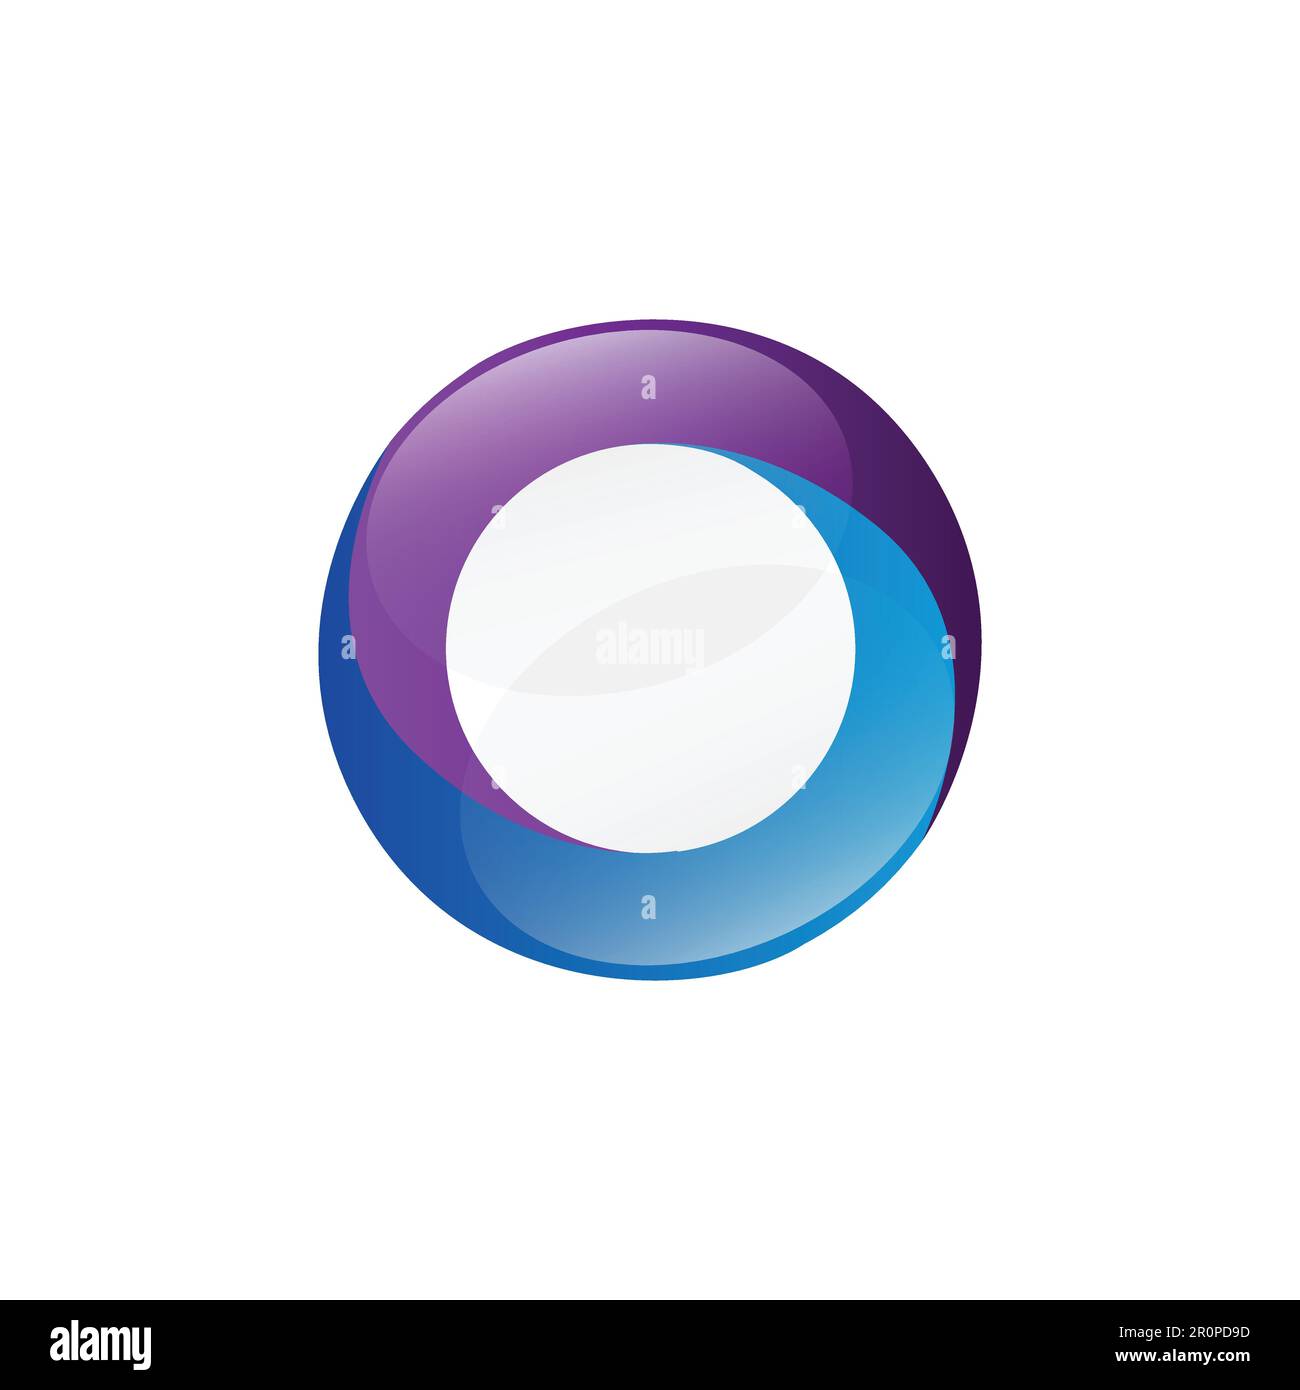 Abstraktes kreisförmiges Logo. Abstraktes Kreislogo Abstraktes, farbenfrohes, sich kreuzendes 3D-Spiraldesign Stock Vektor